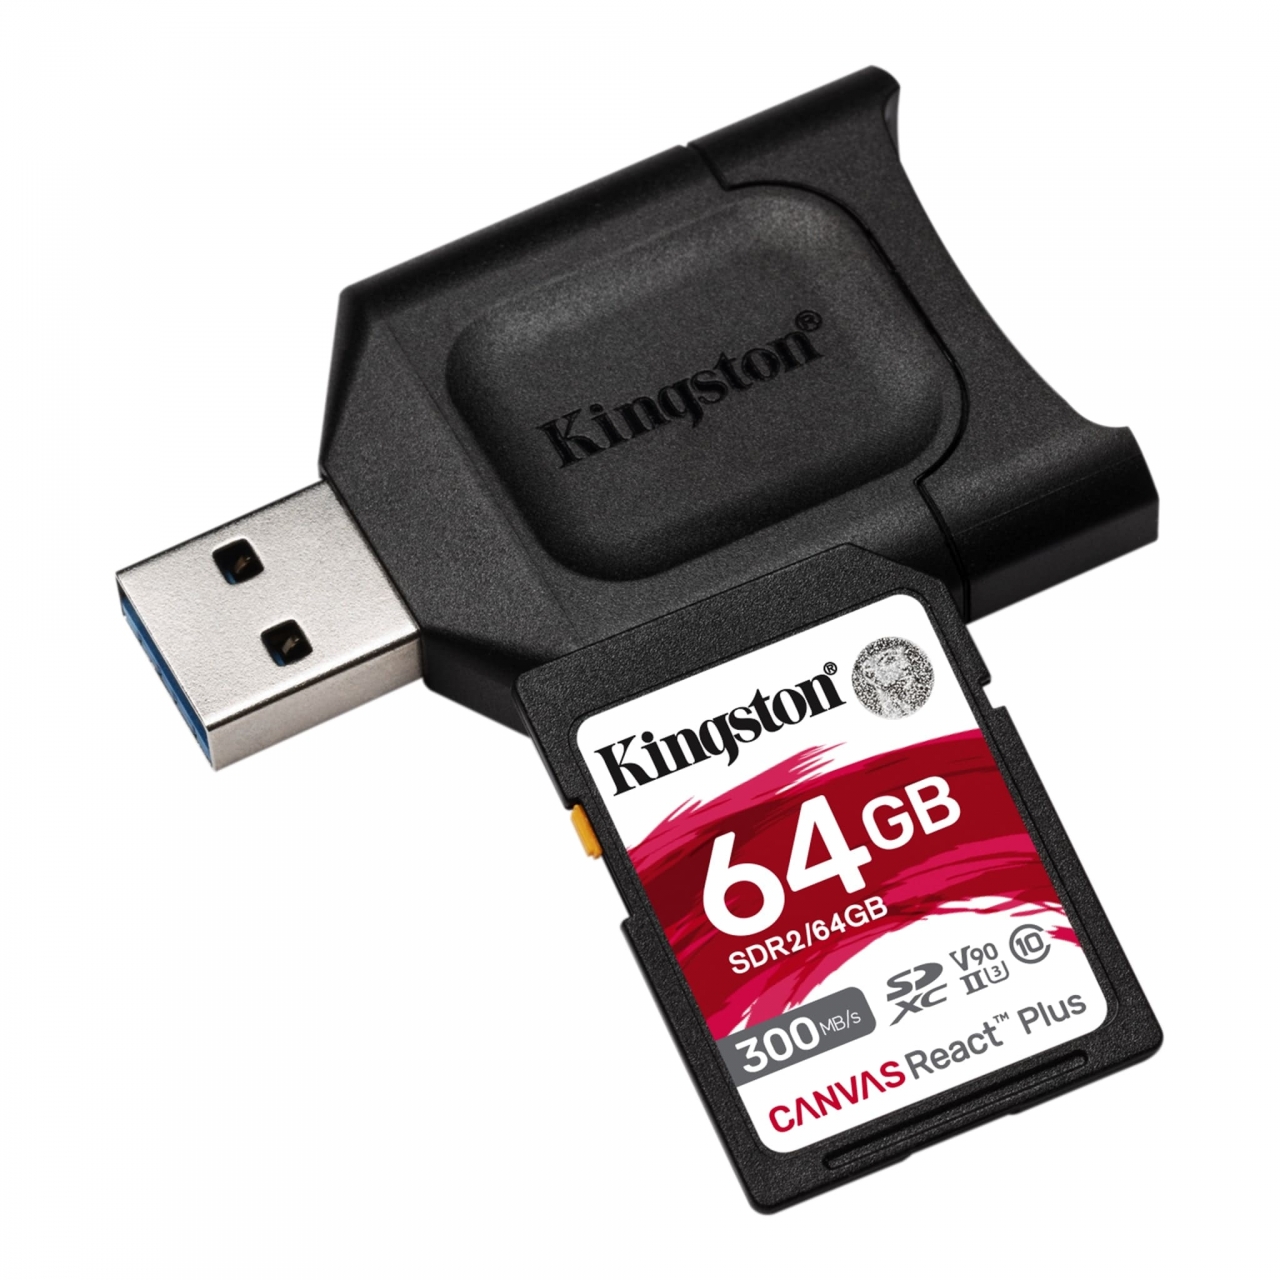 KINGSTON 64GB SD CLASS 10 Hafıza Kartı +Kart Okuyucu MLPR2/64GB